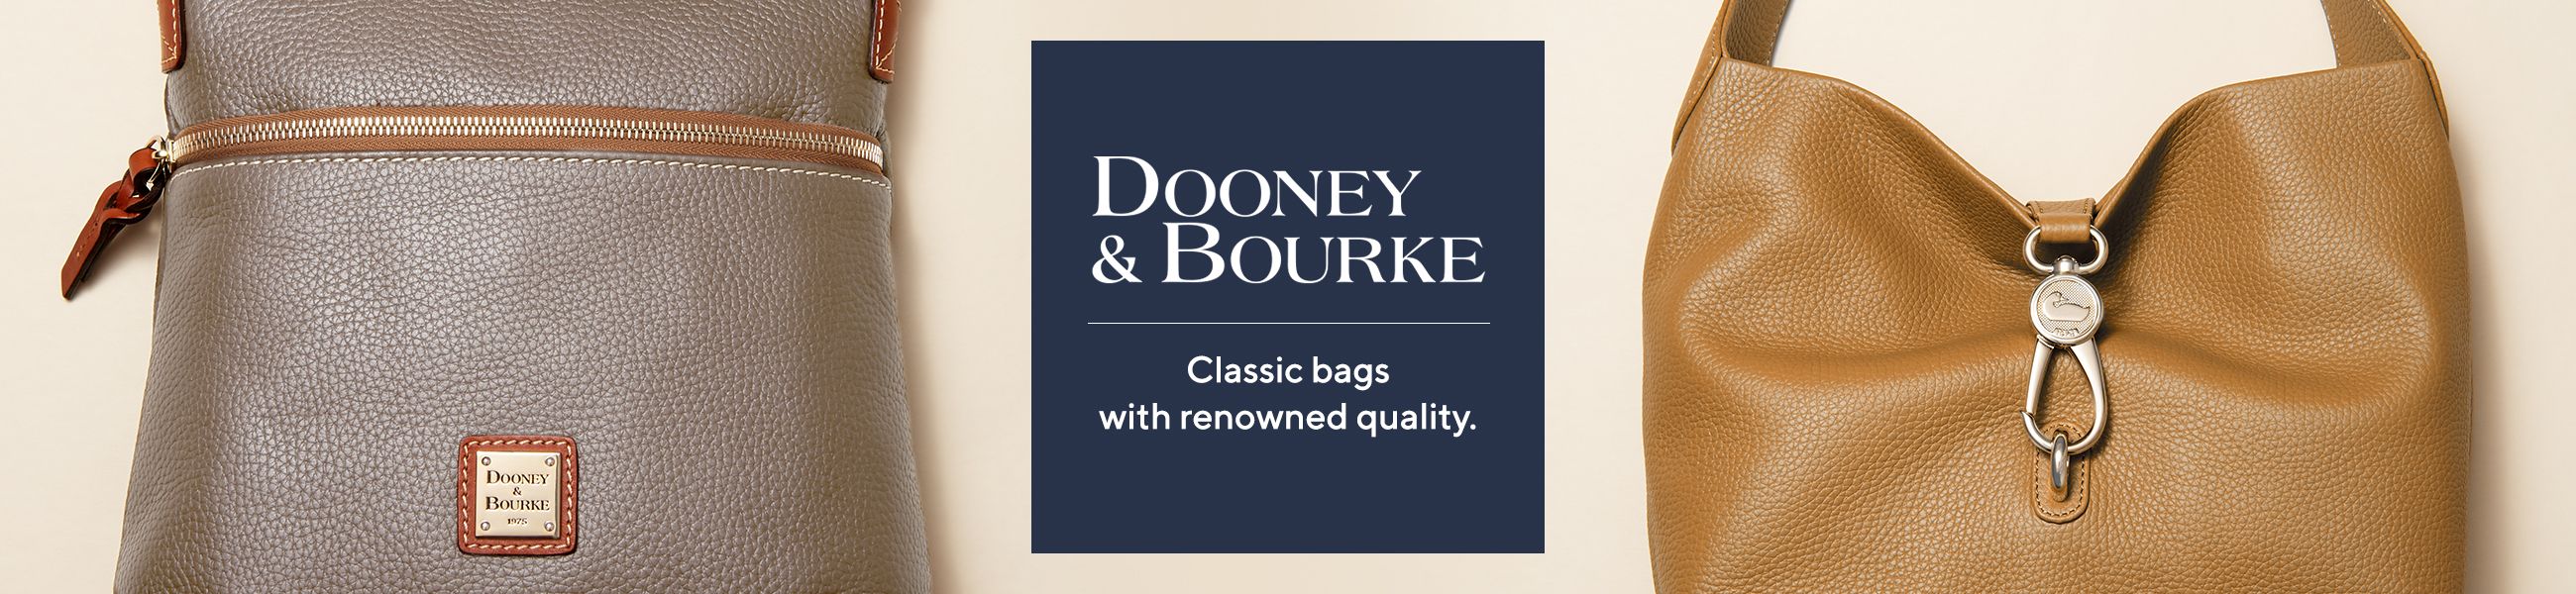 qvc dooney and bourke official site .com